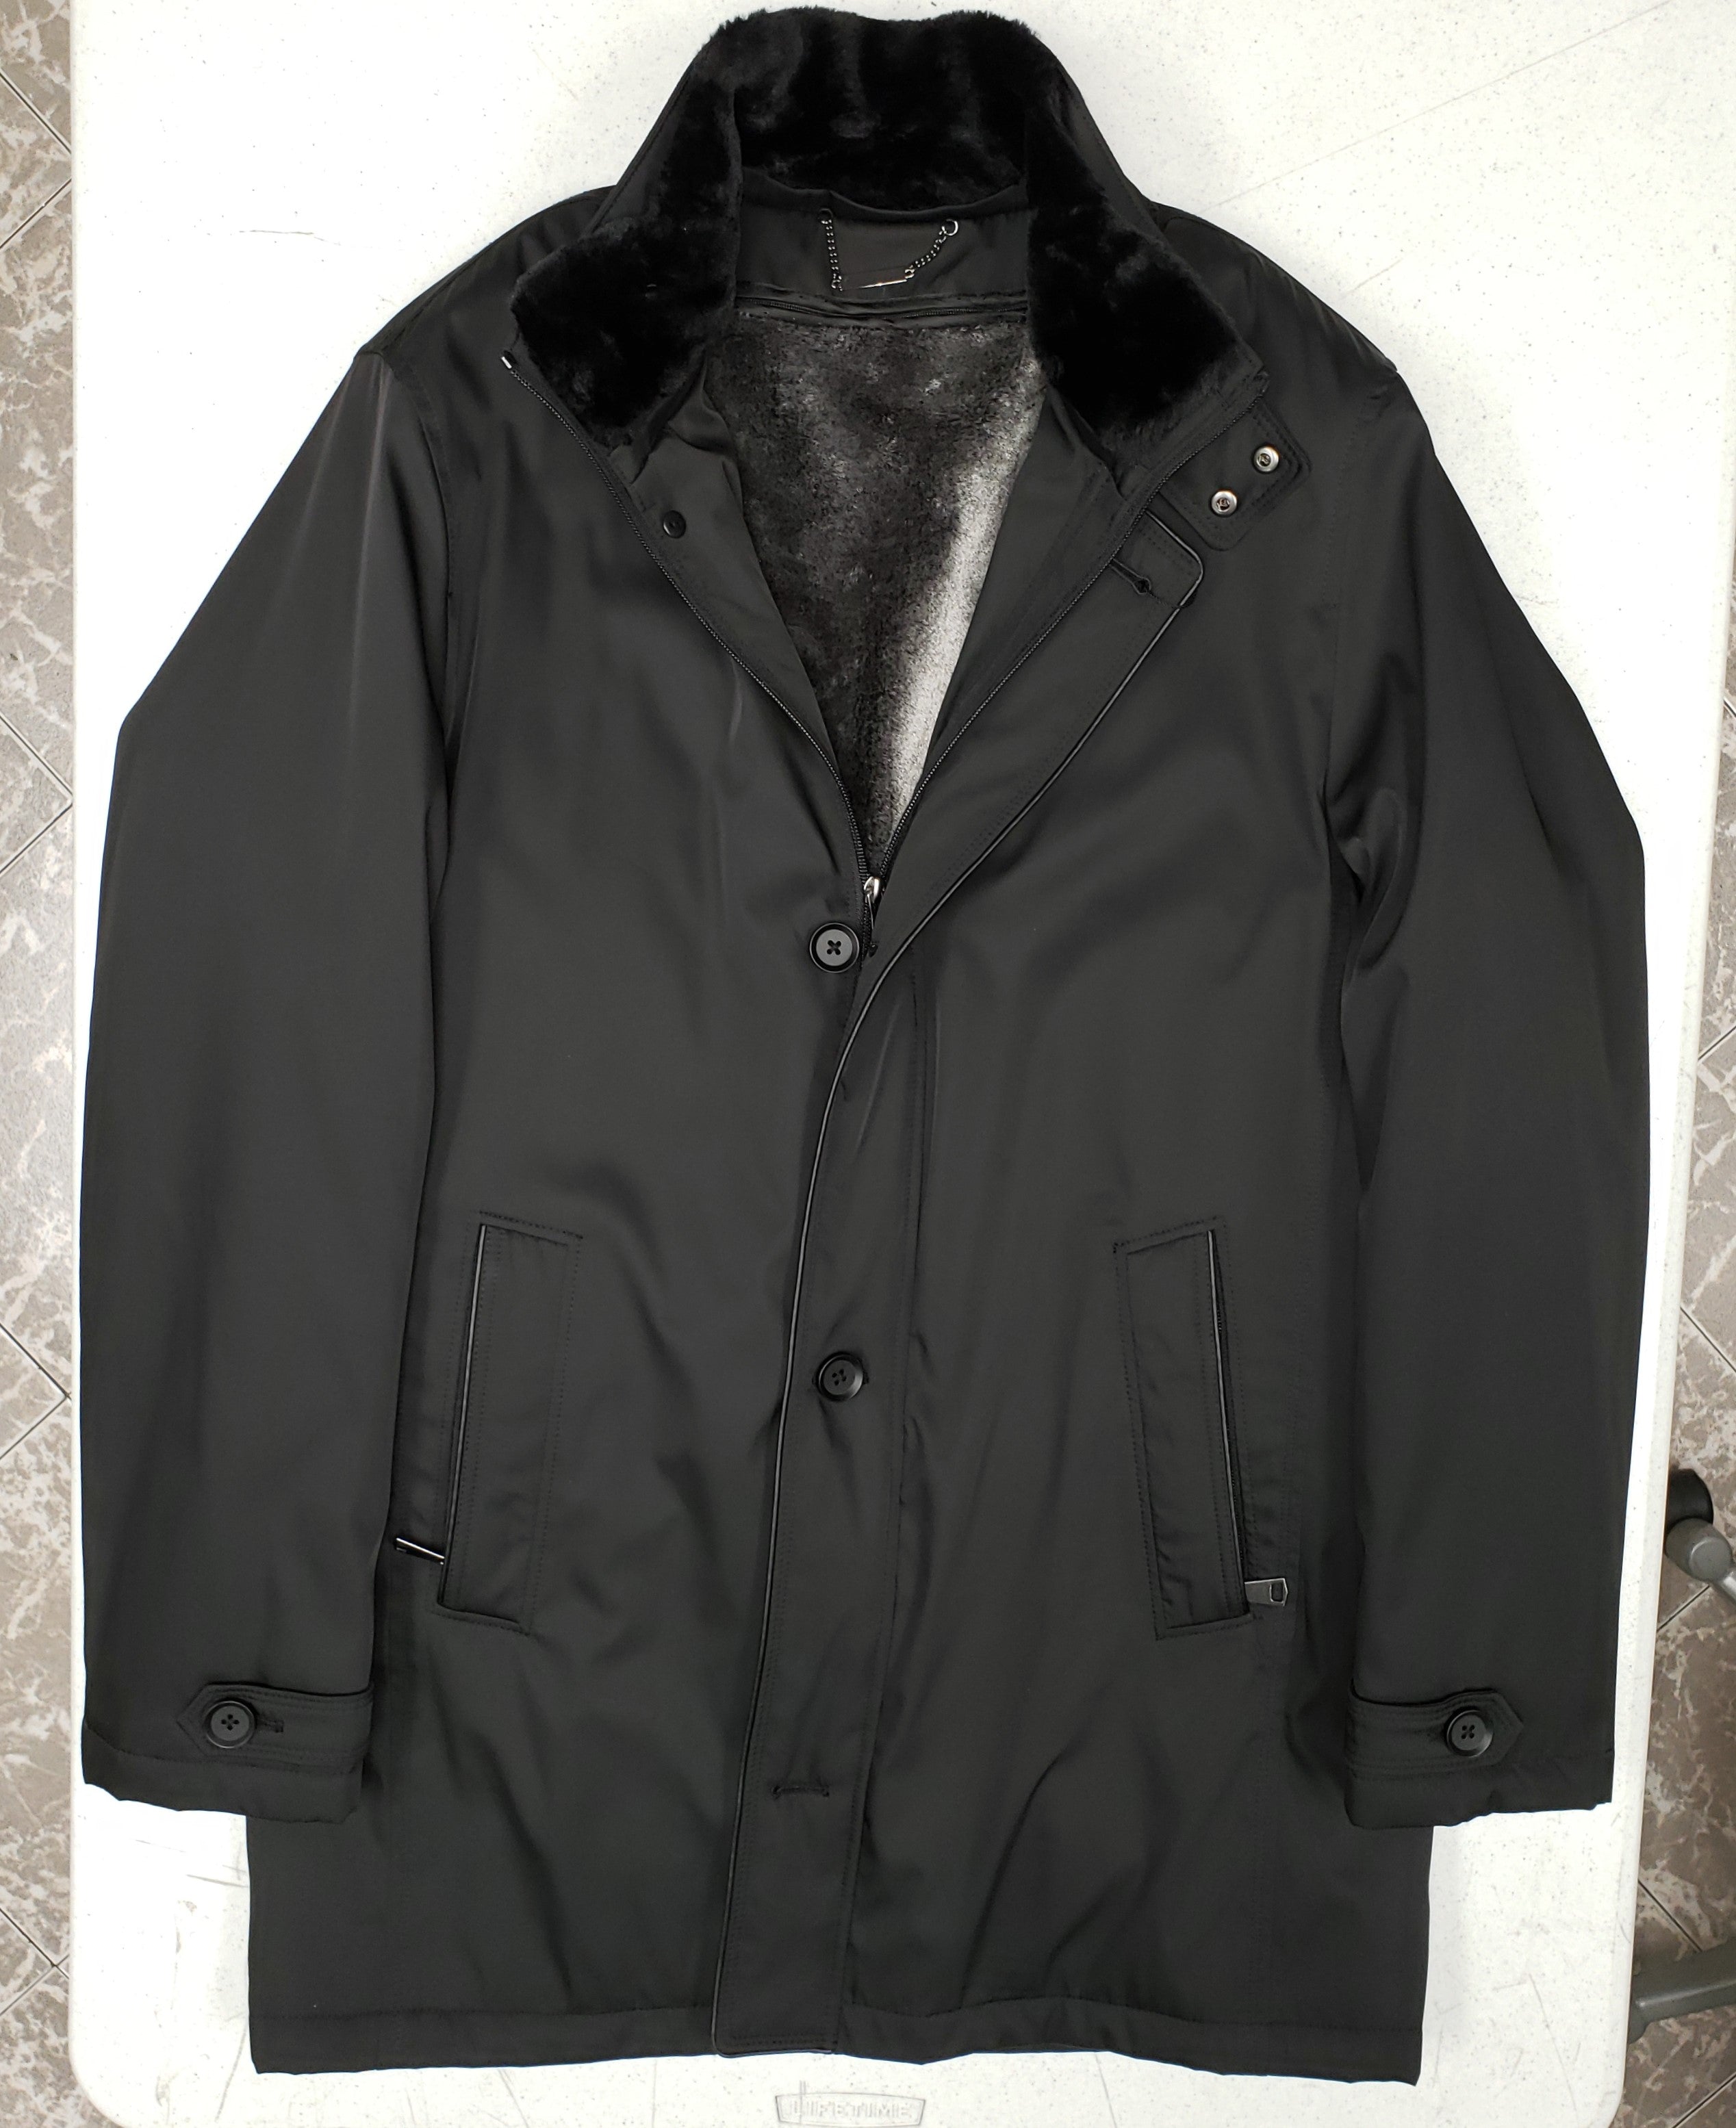 Luke - Black 3/4 Nylon Coat w/ removable faux fur lining & inner collar